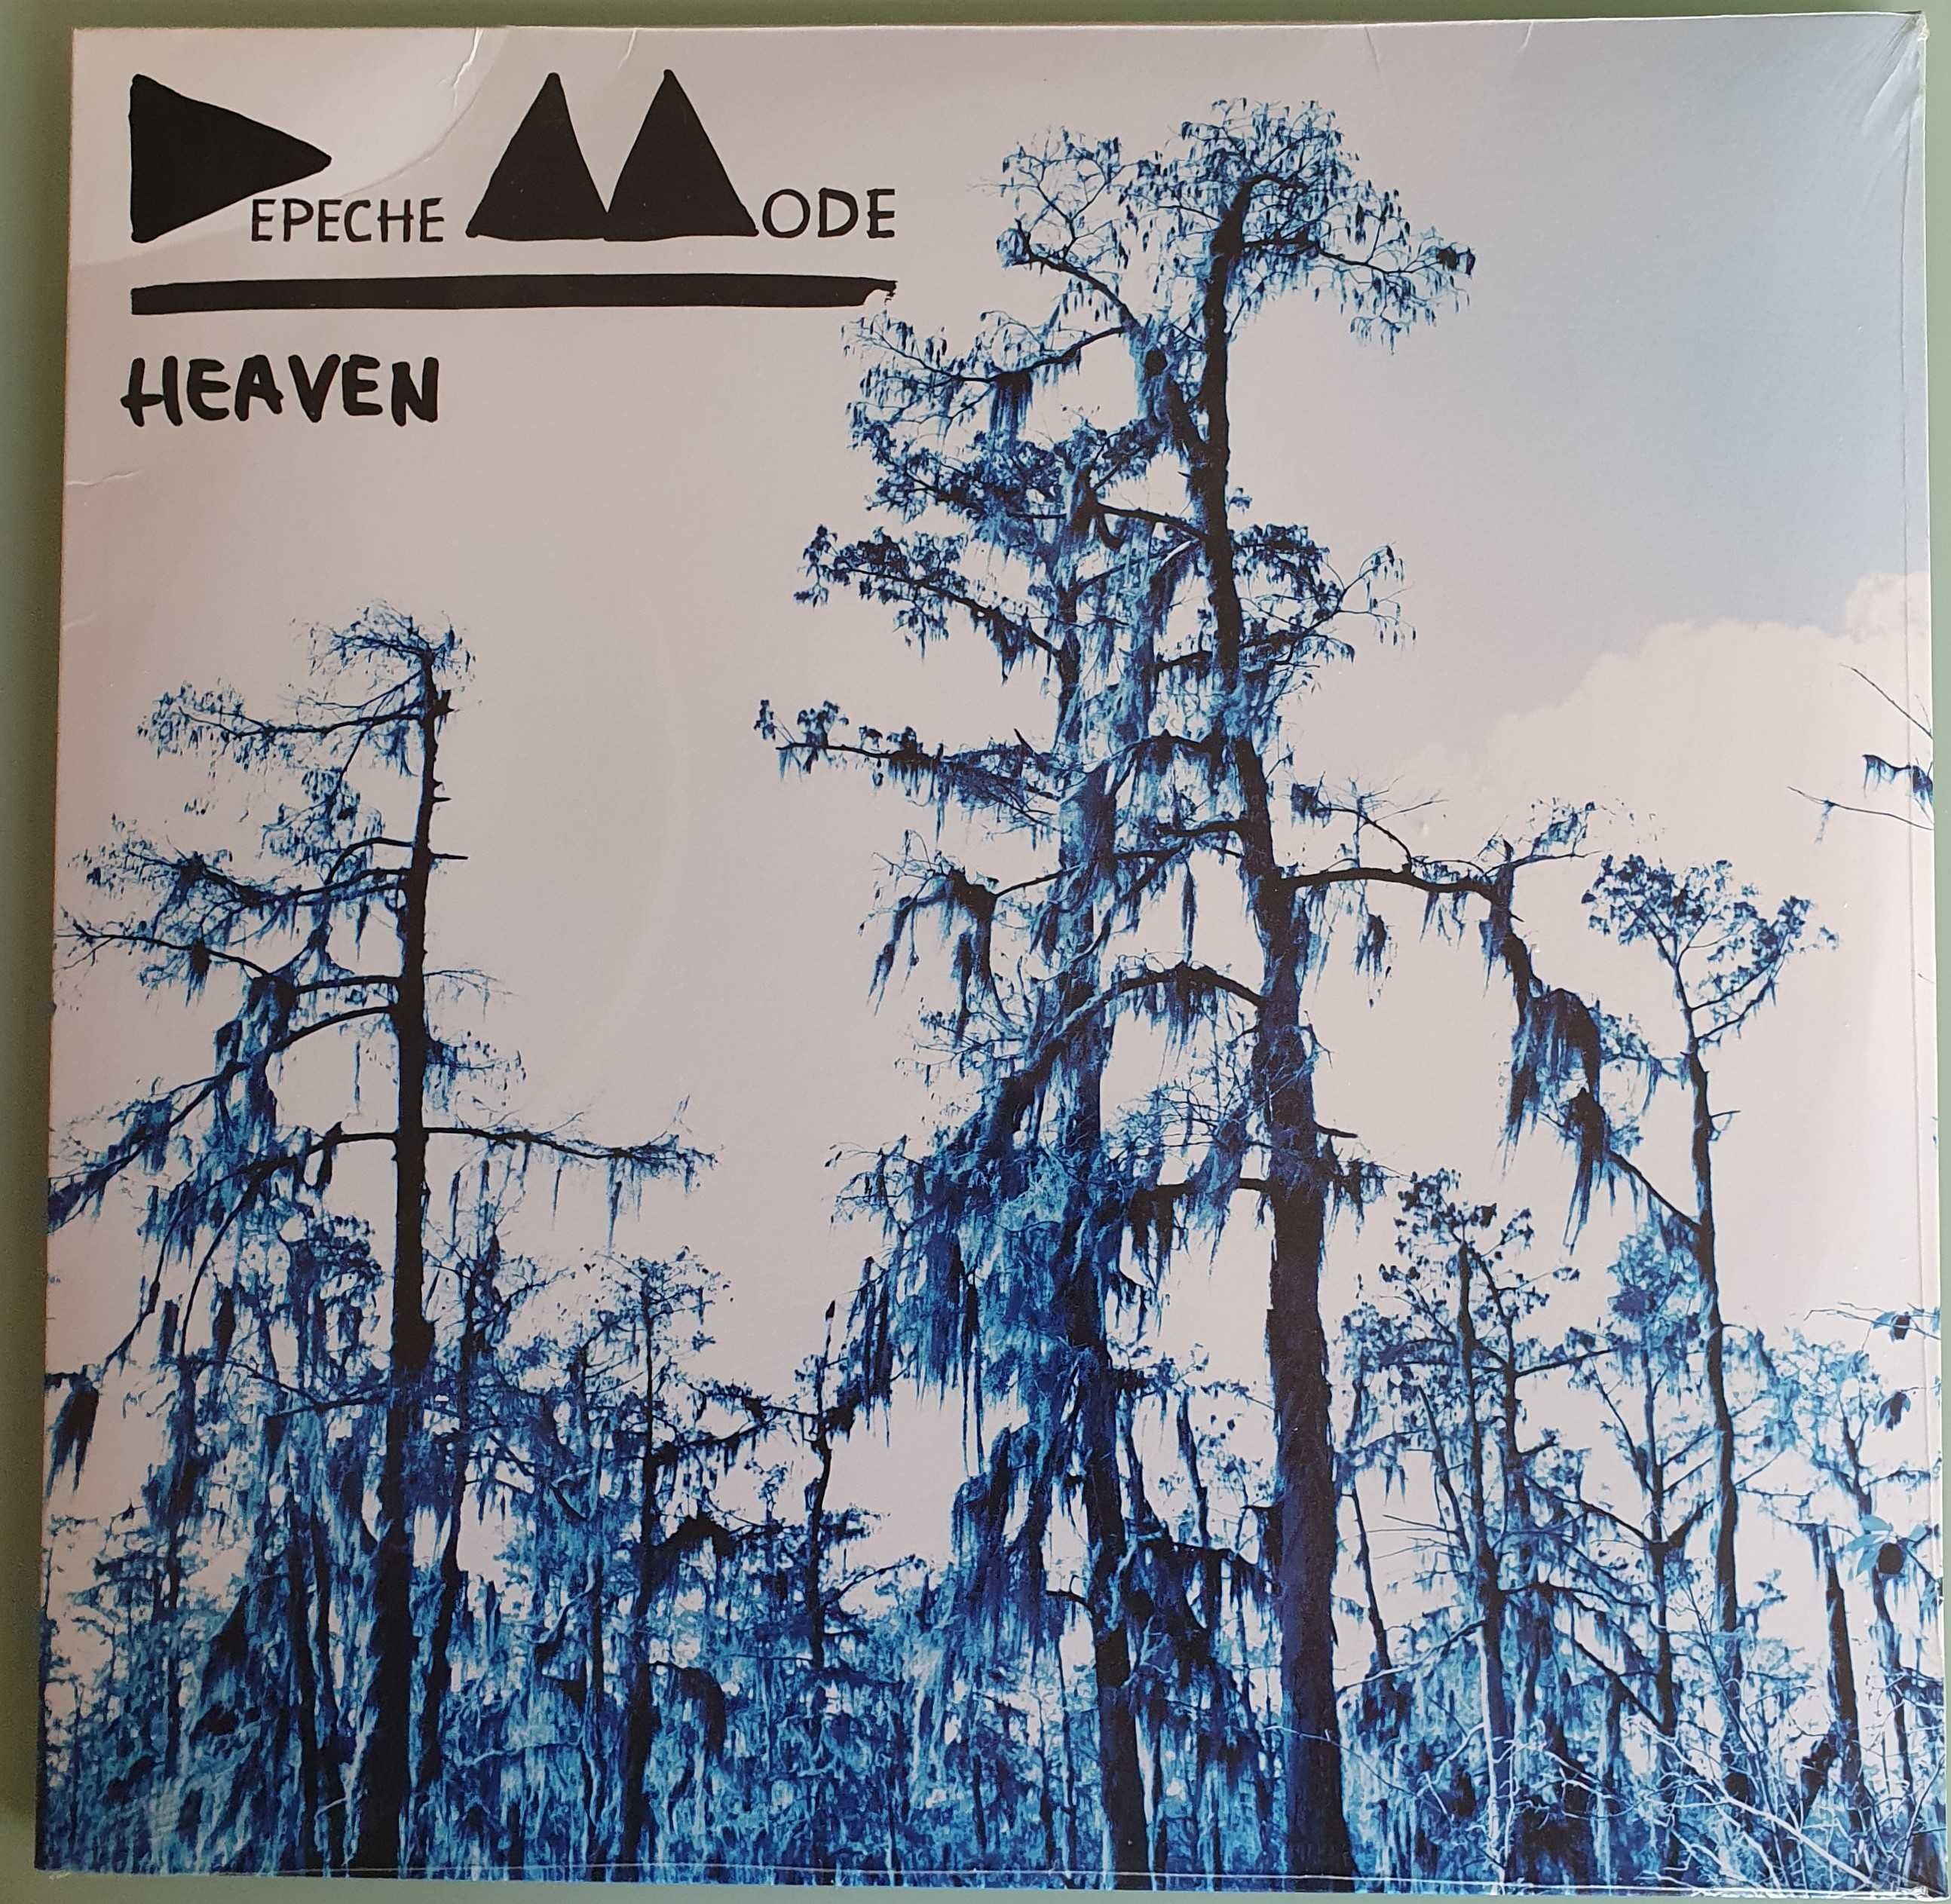 Depeche Mode "Heaven" novo